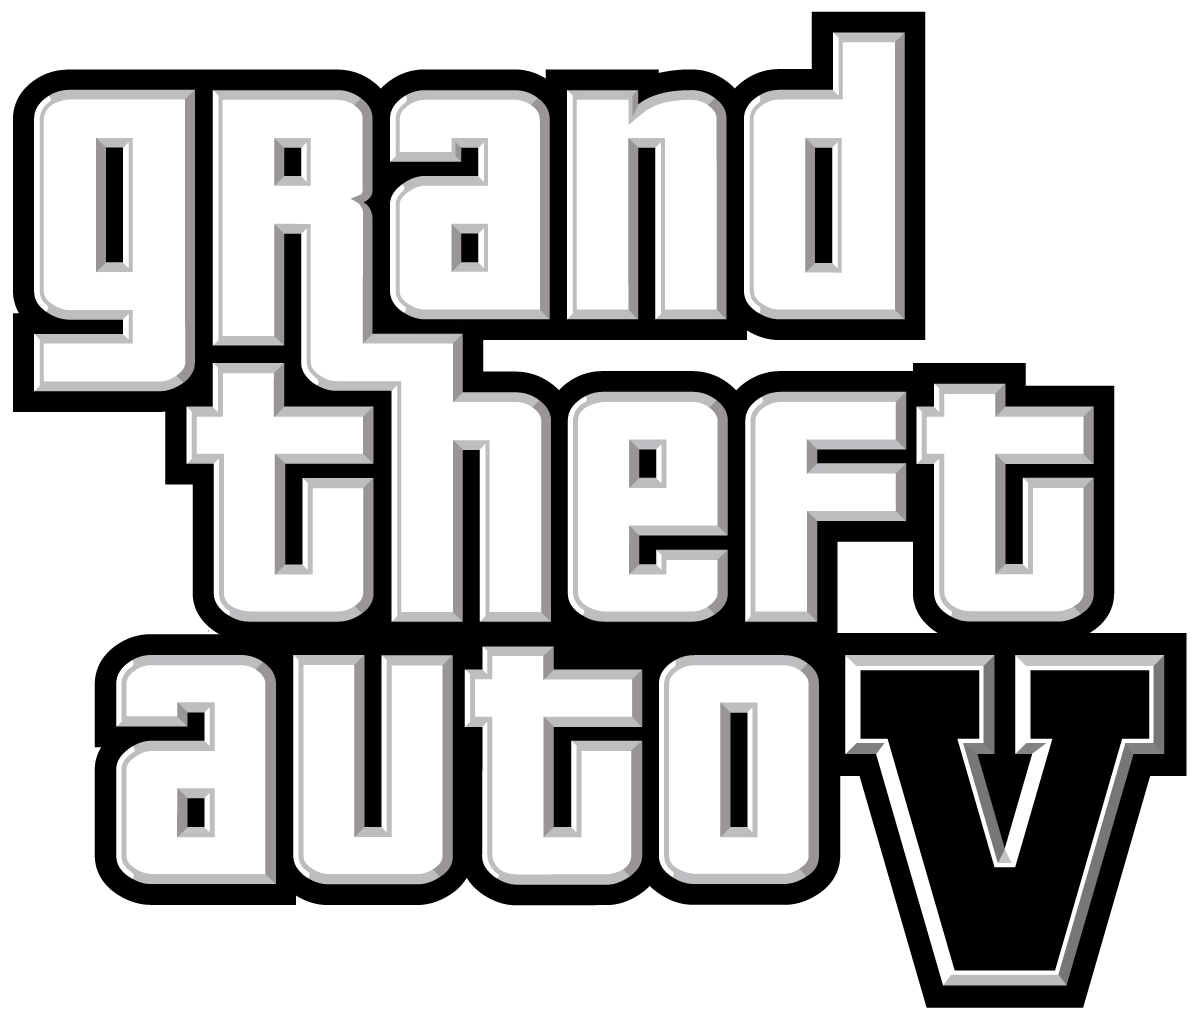 Gta lines. GTA 5 значок. Grand Theft auto 5 иконка. Значок игры GTA 5. GTA 5 надпись.